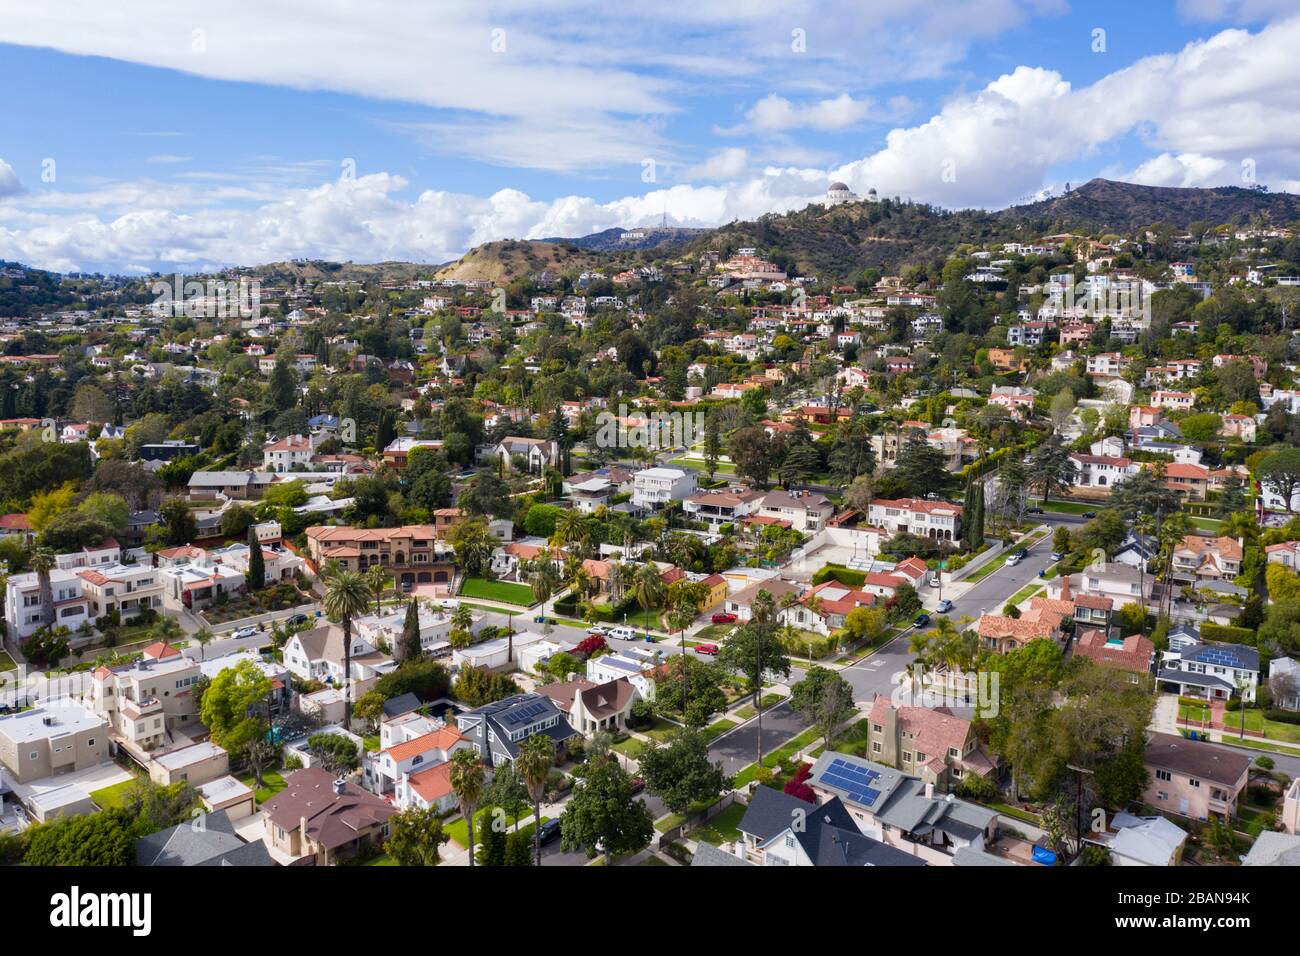 https://c8.alamy.com/comp/2BAN94K/aerial-views-of-los-feliz-and-hollywood-hills-california-2BAN94K.jpg